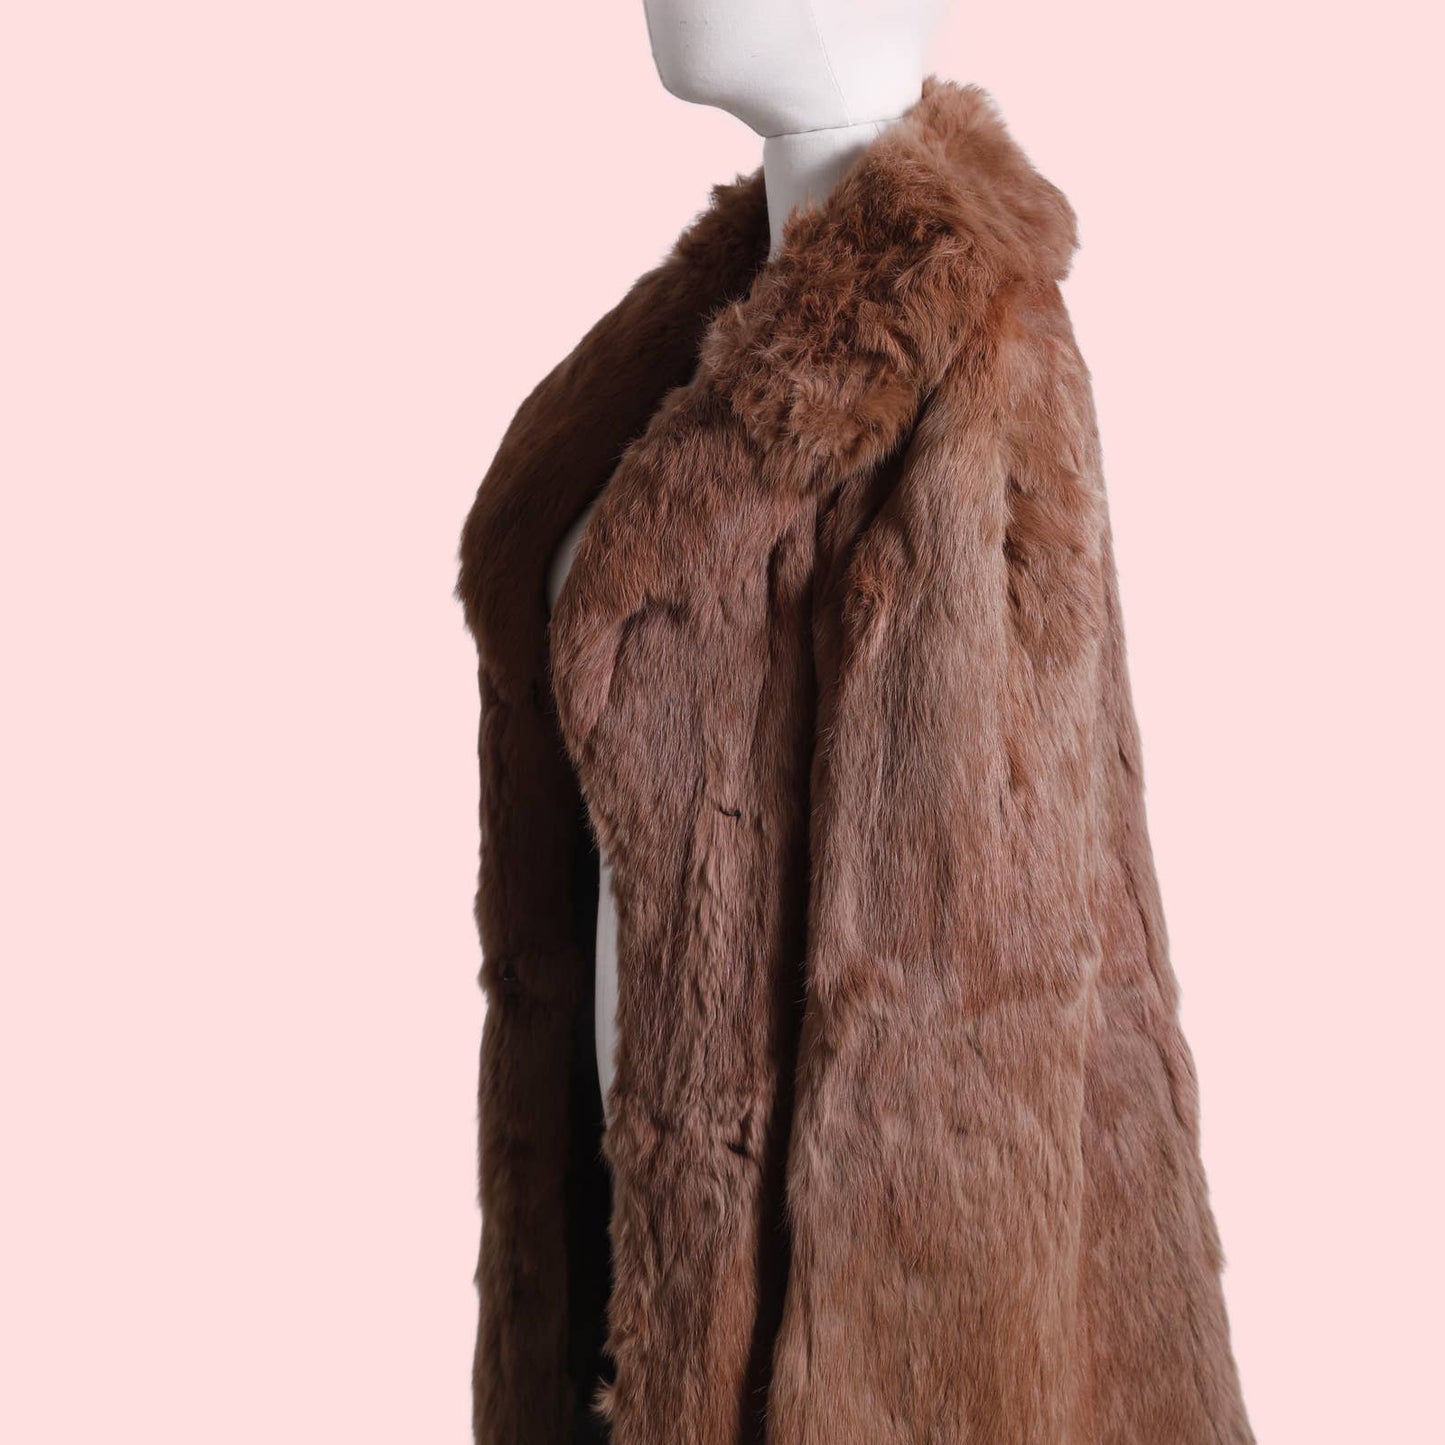 VINTAGE 1970's Dusty Rose Long Fur Coat